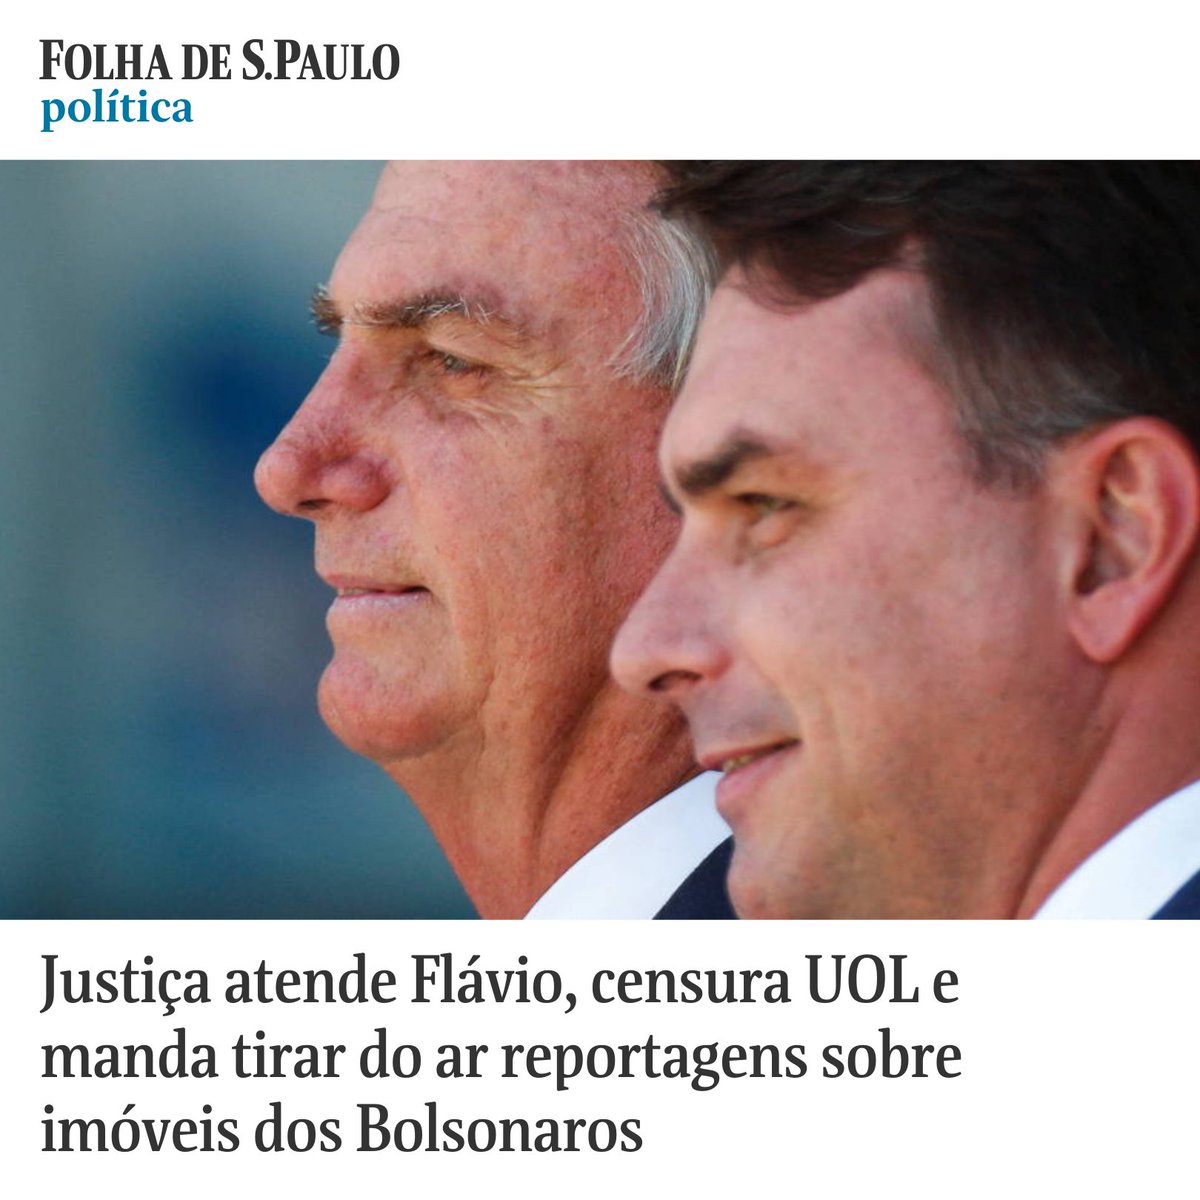 @folha's photo on FlÃ¡vio Bolsonaro